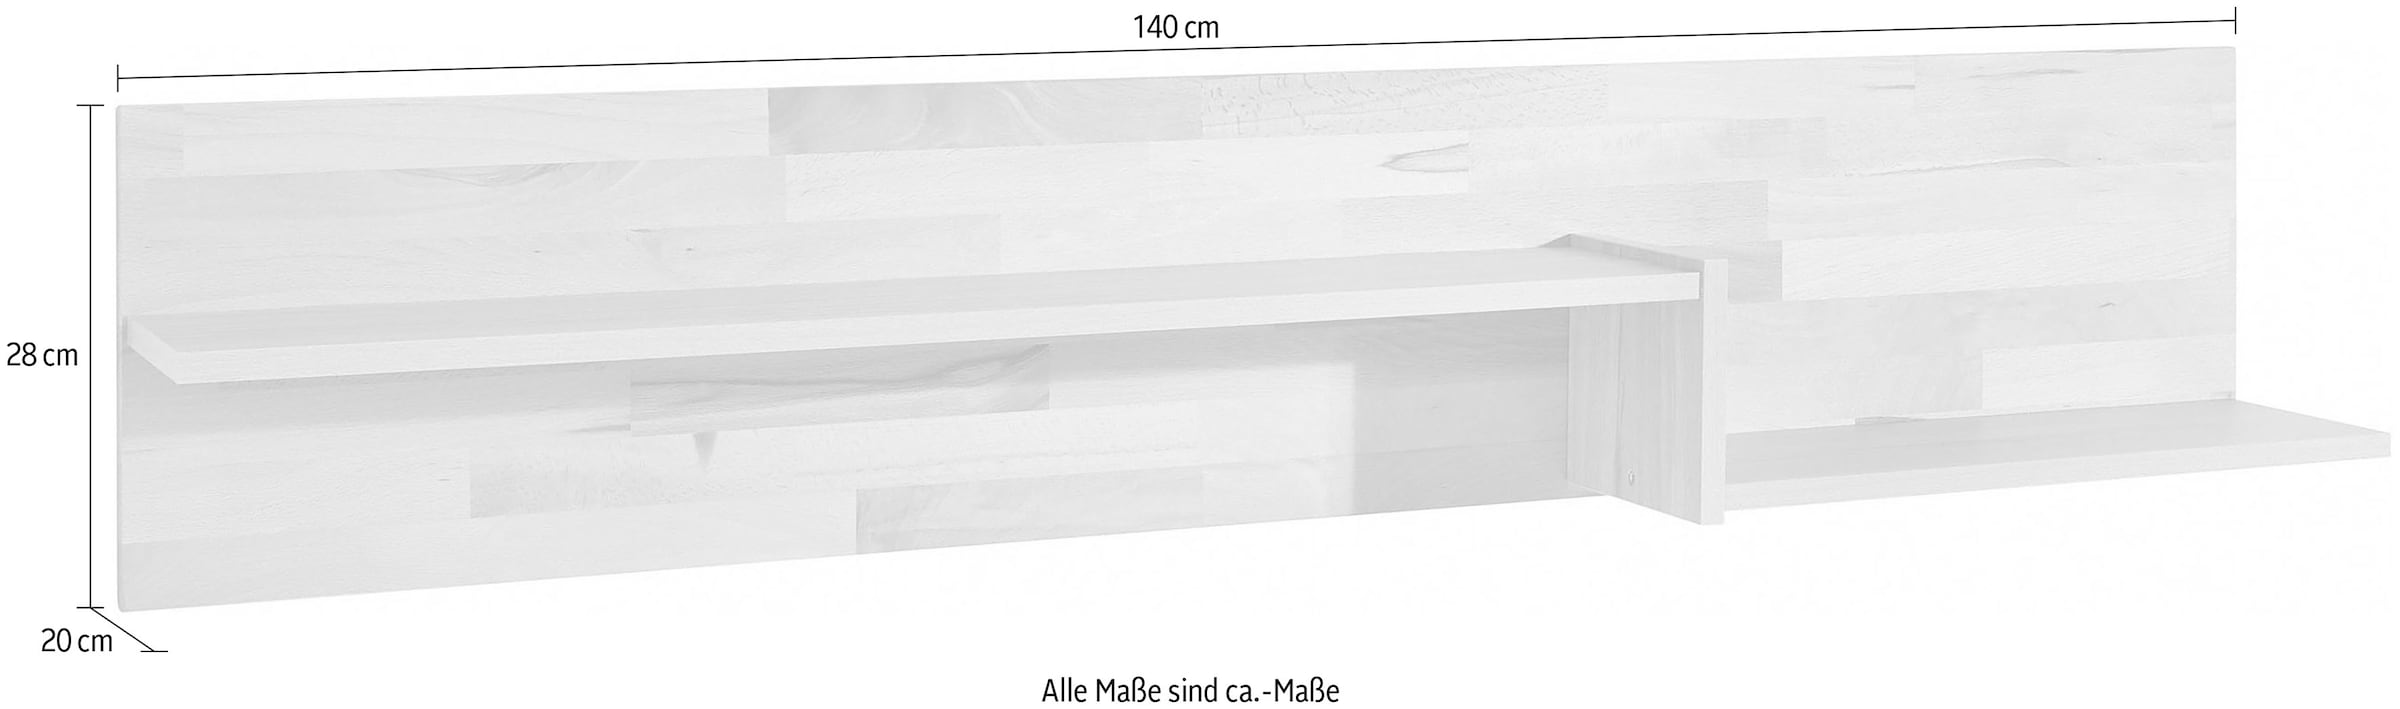 Home affaire Wandregal, Breite 140 cm, teilmassiv, FSC®-zertifiziert